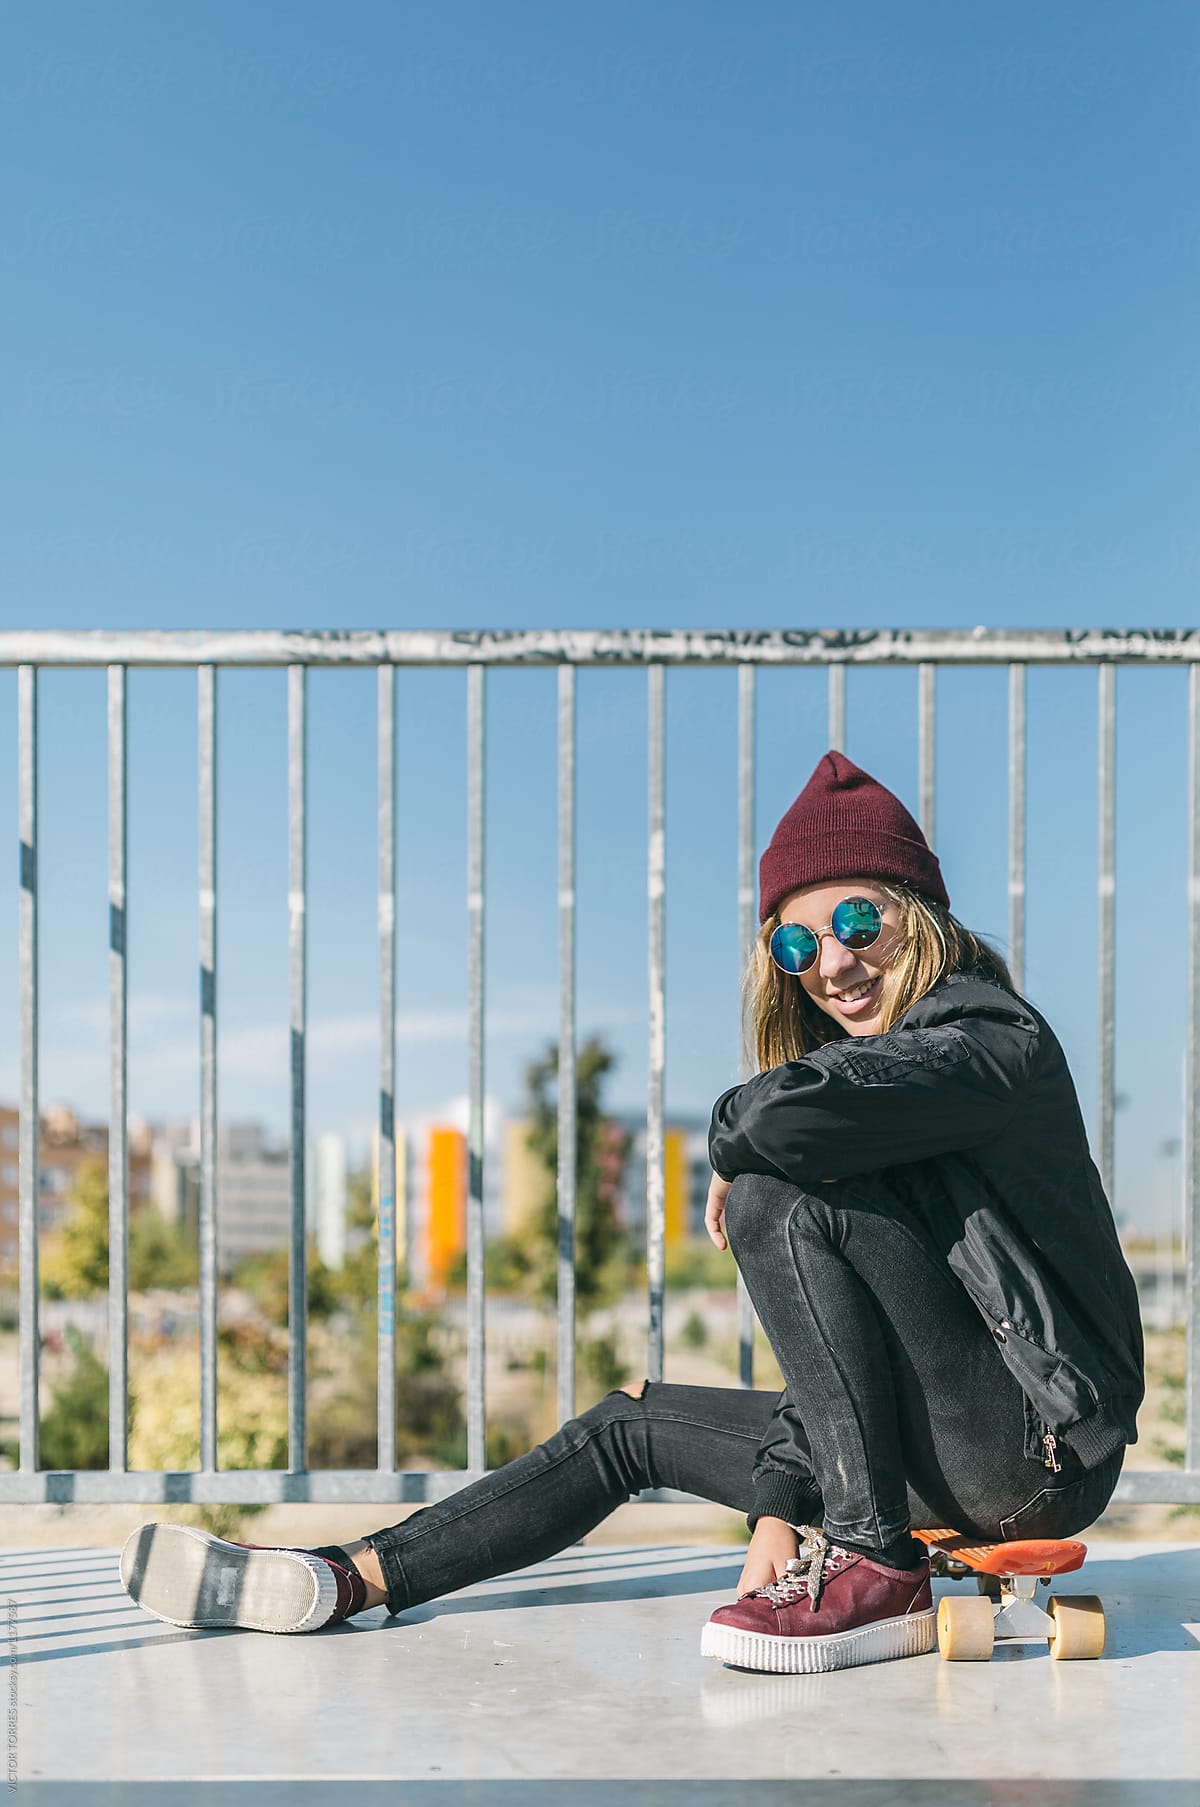 Smiley teen-age girl sitting on skateboard.